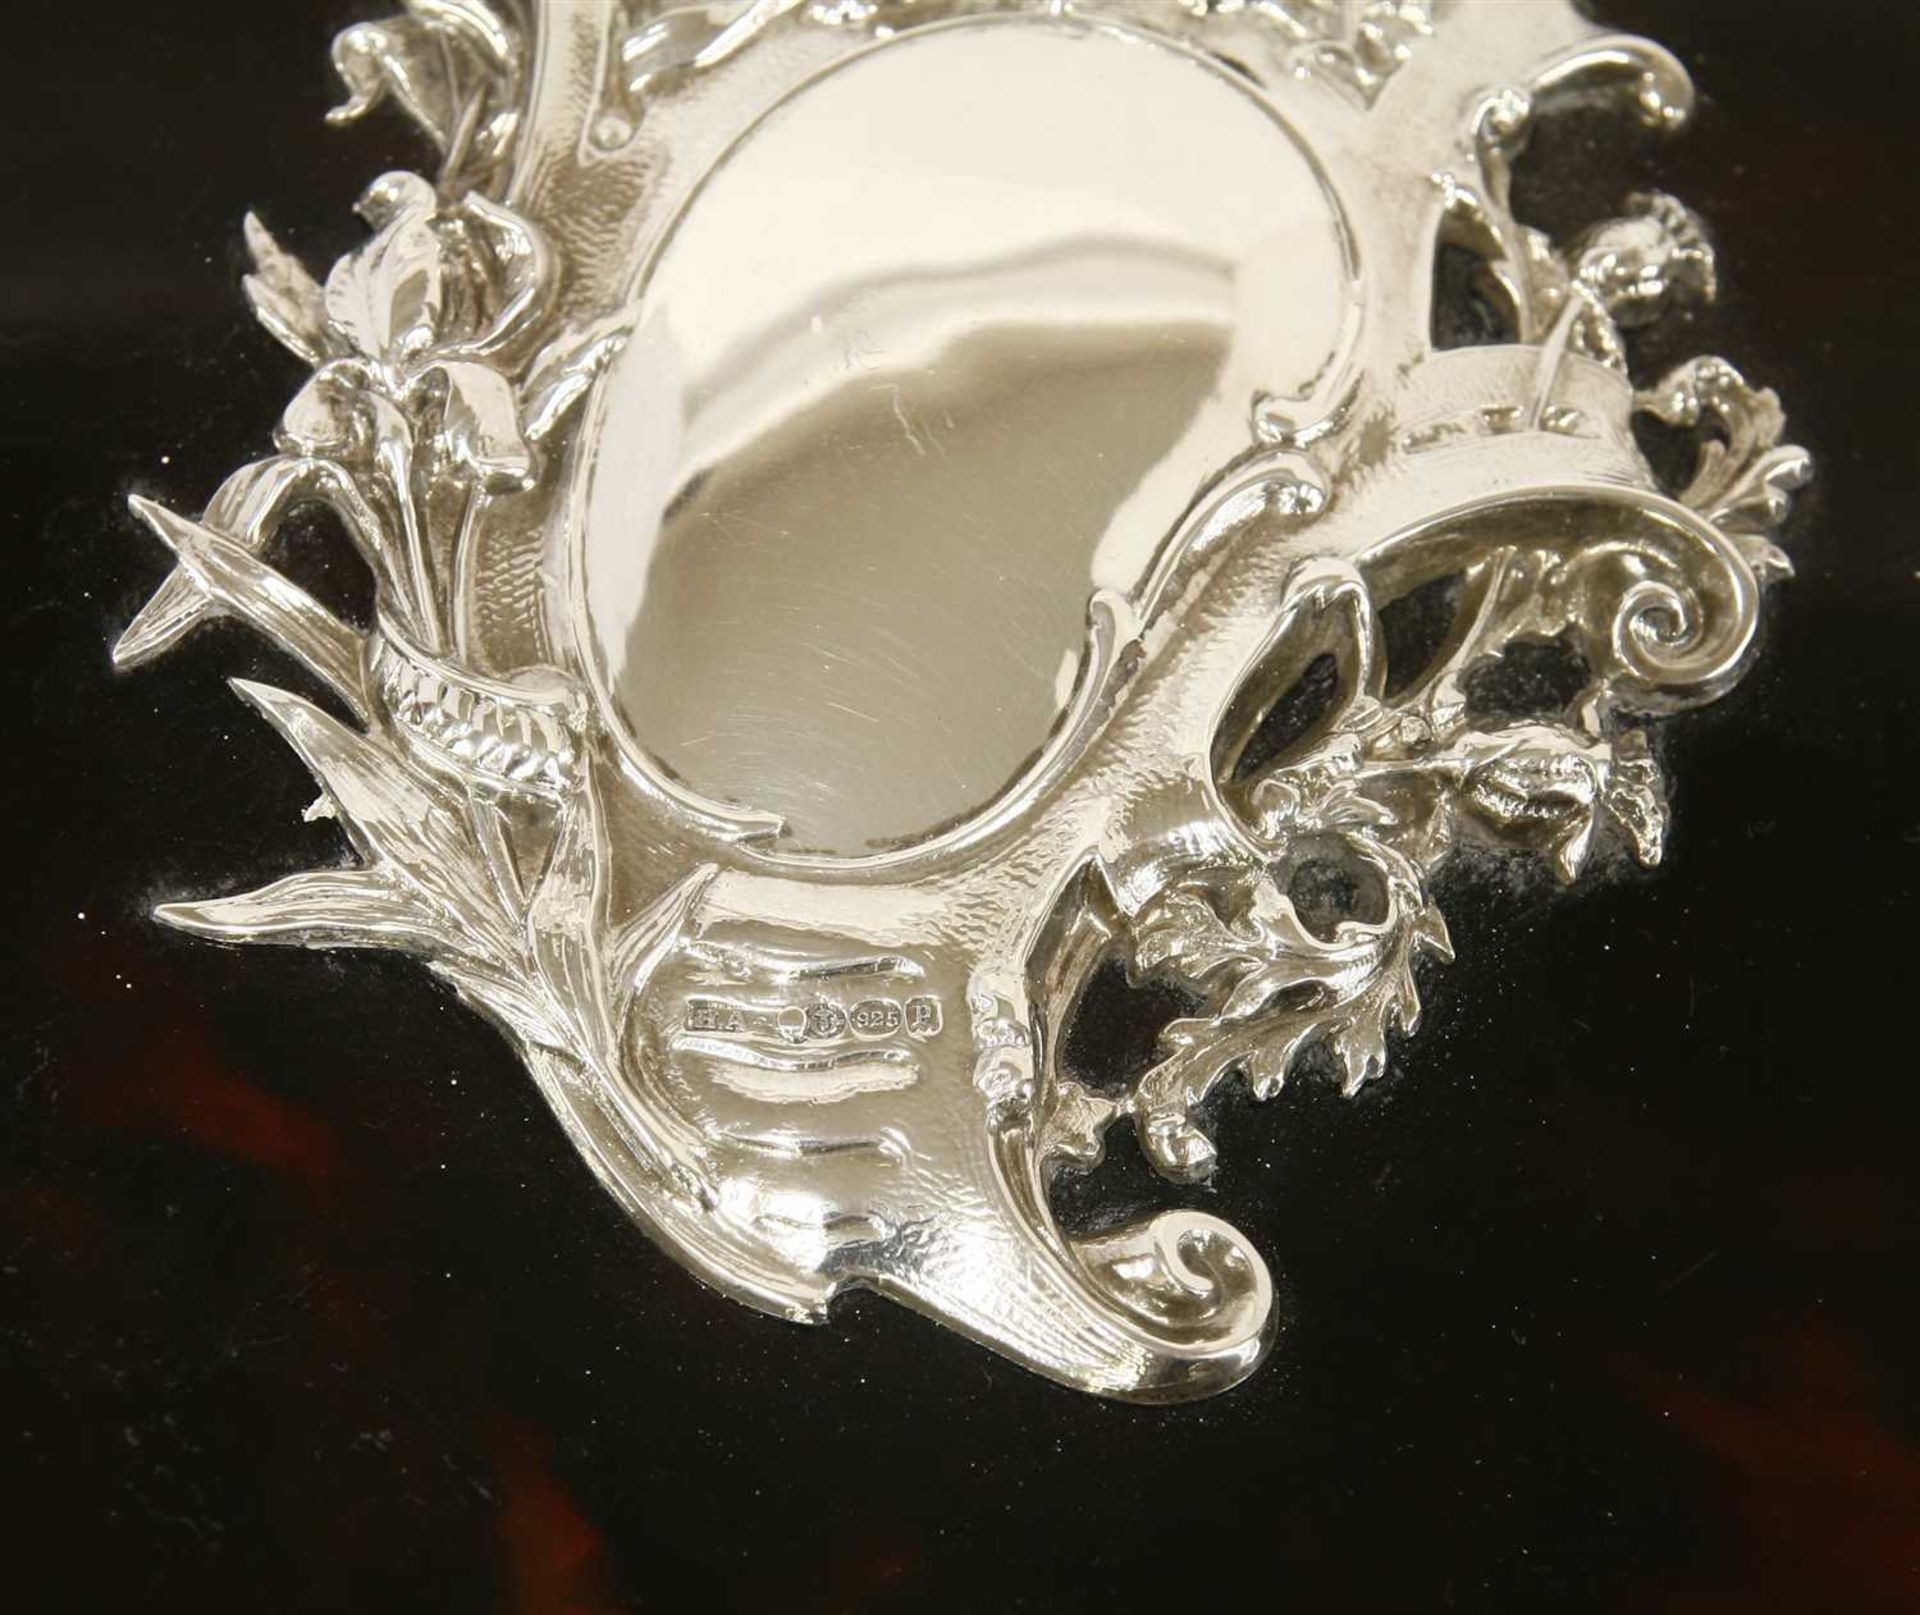 A tortoiseshell desk blotter with ornate silver mounts, - Image 2 of 2